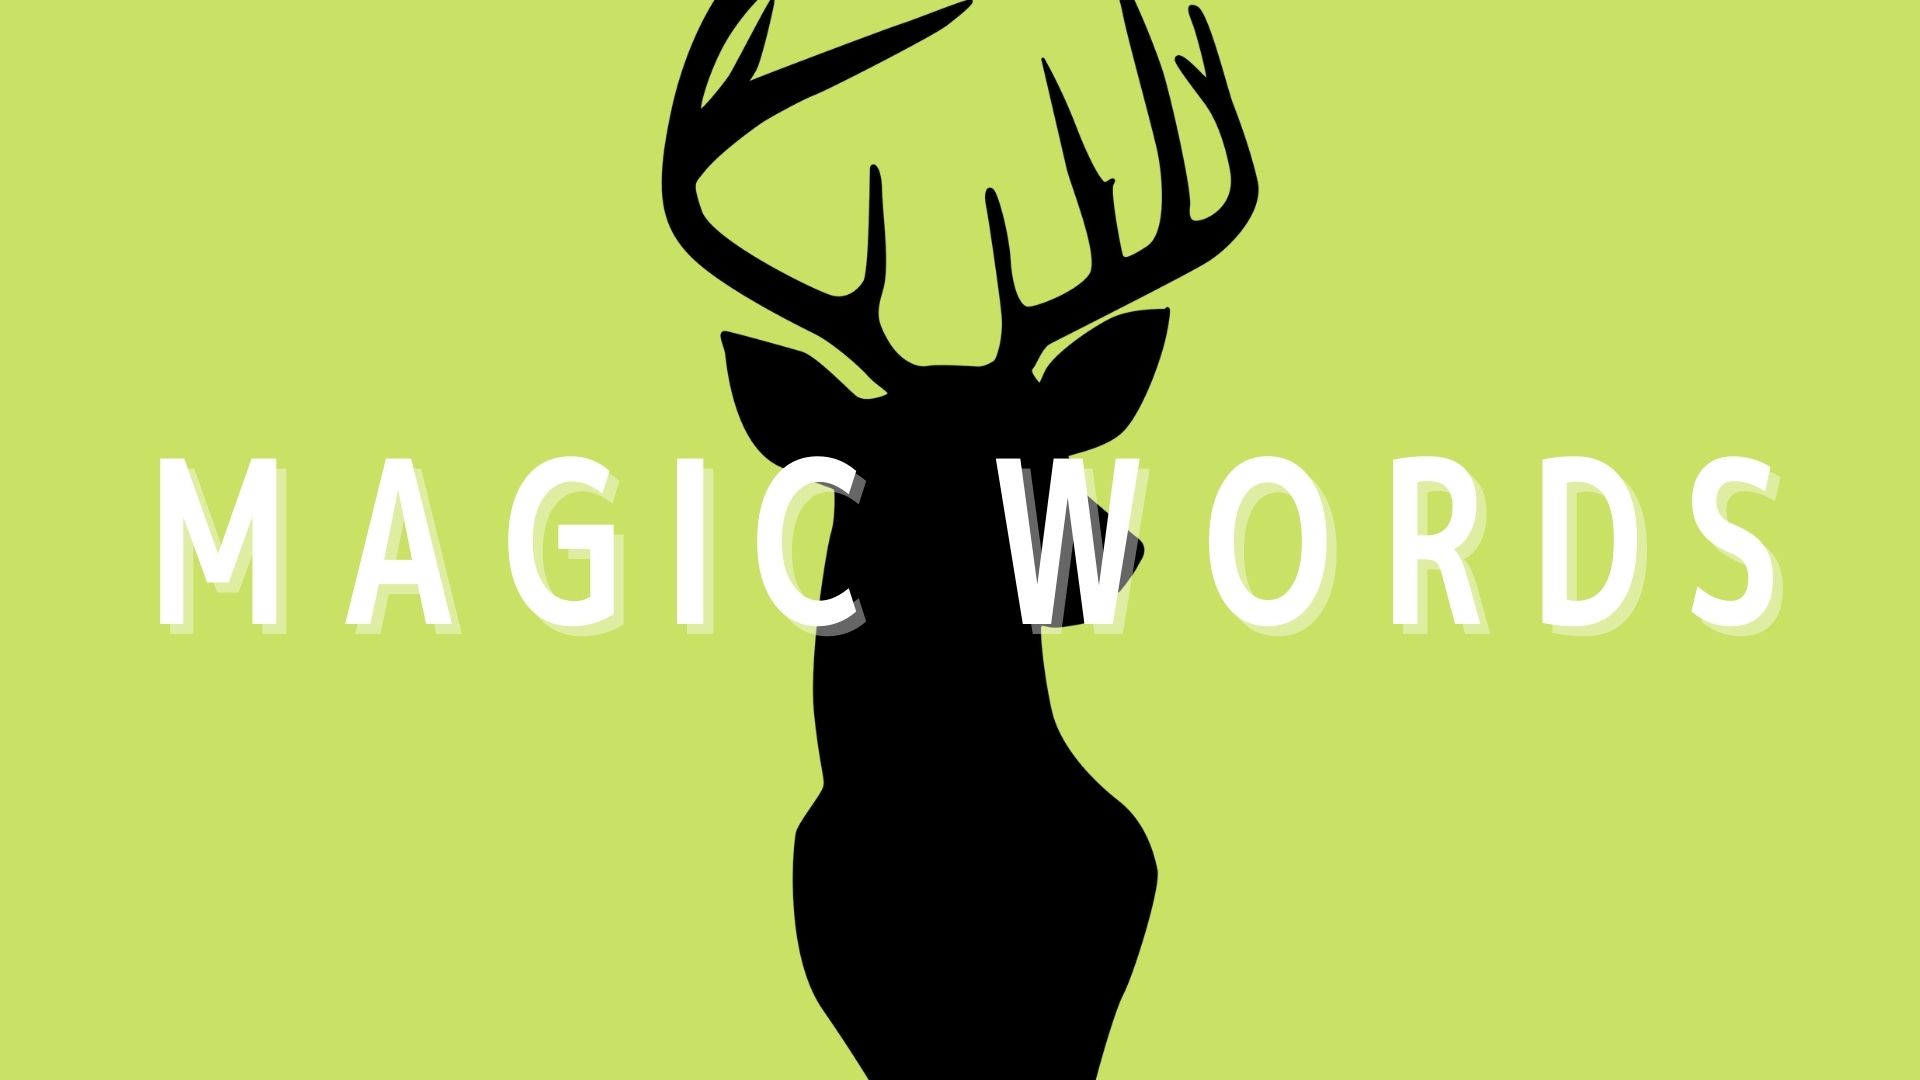 Magic words, inuit, イヌイット、魔法の言葉、口承詩